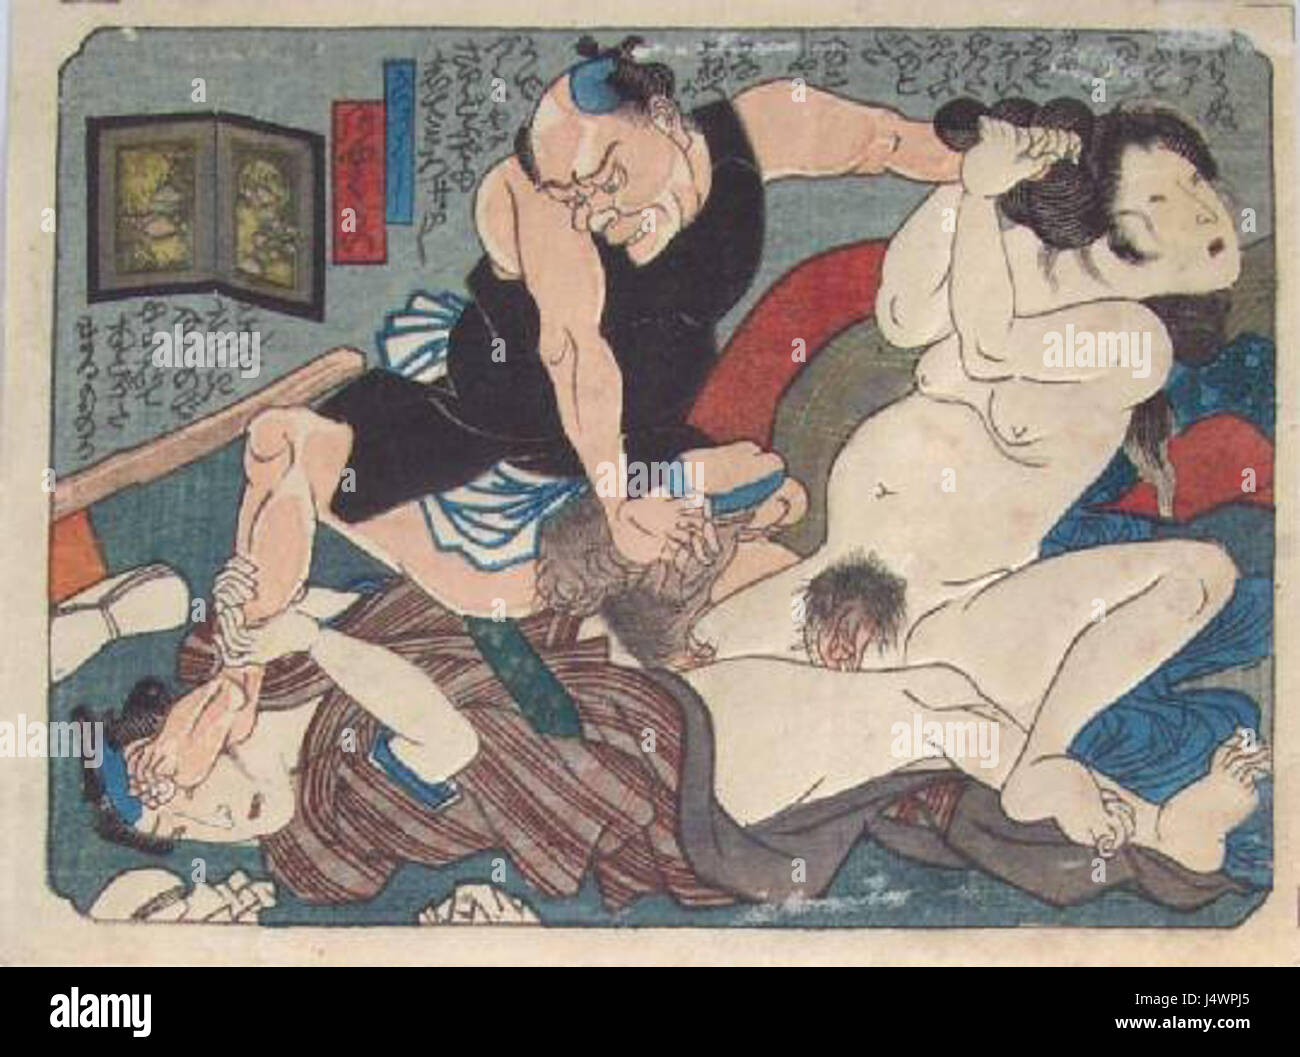 японская эротика древняя фото 18